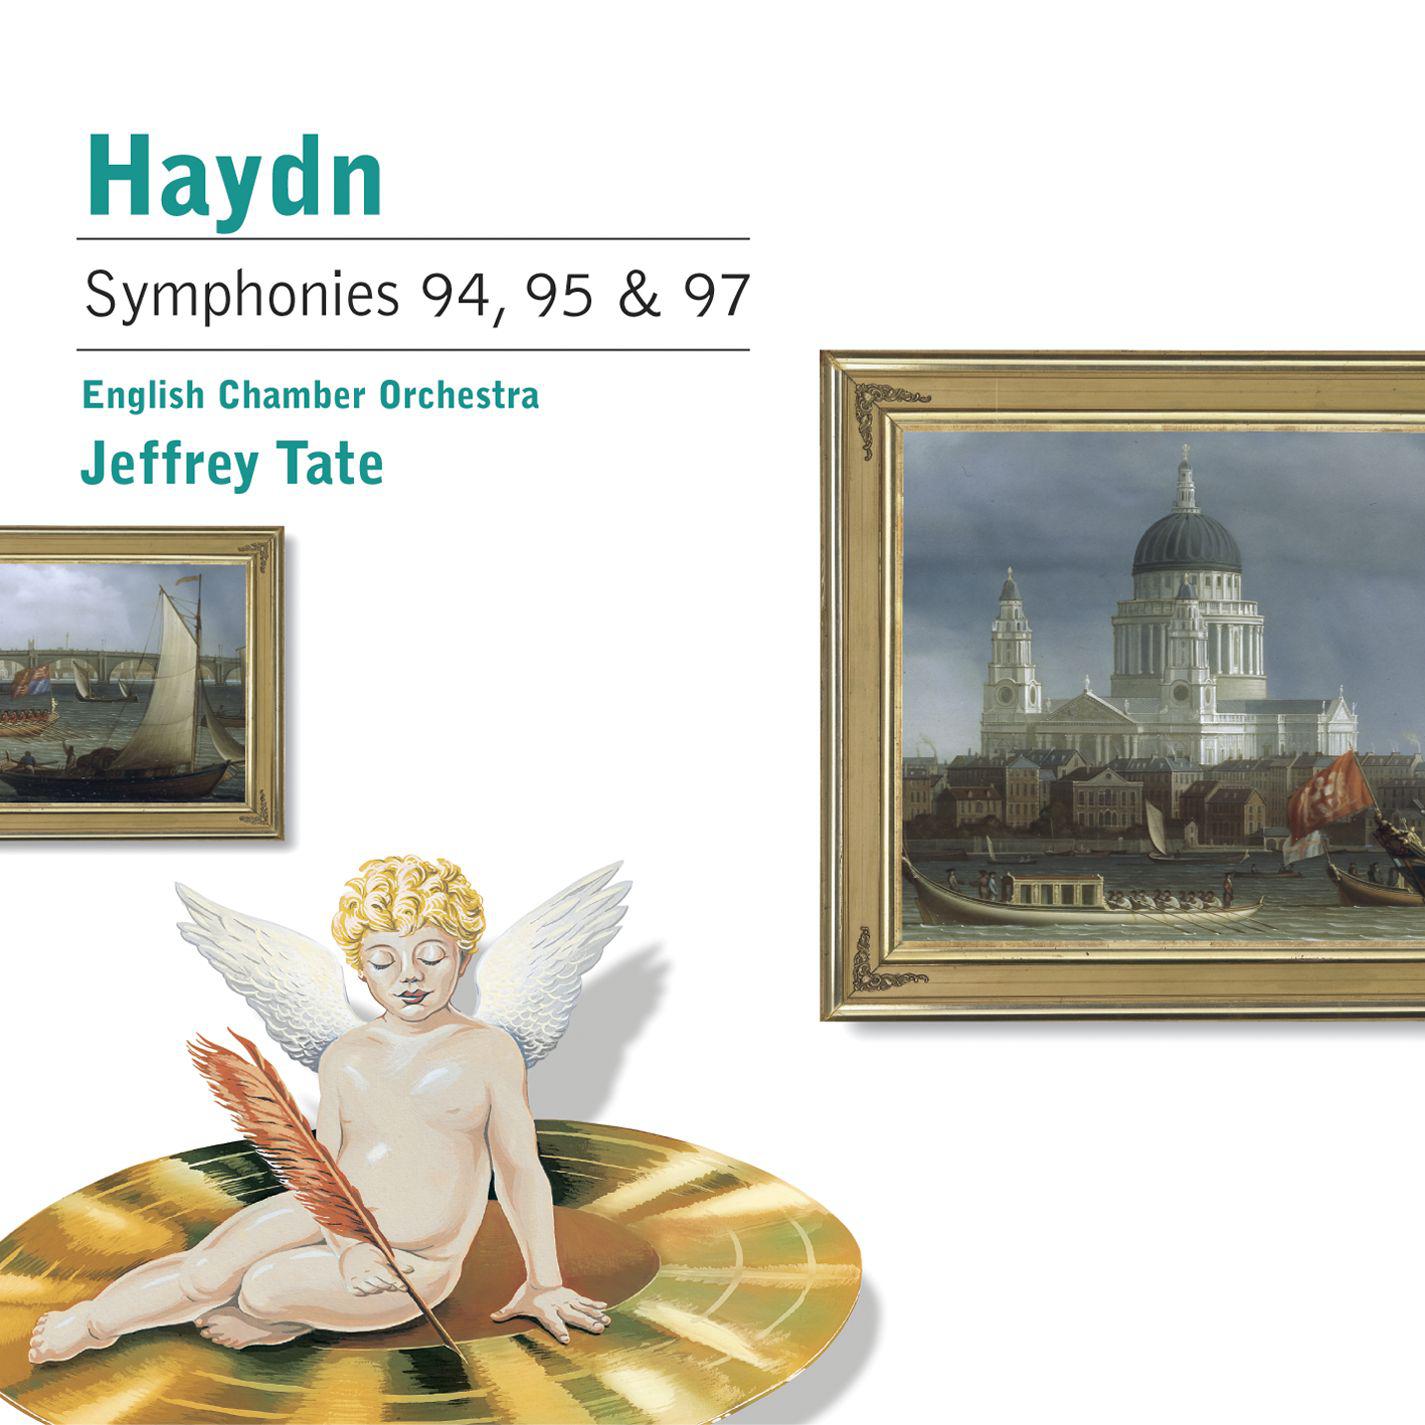 Haydn: Symphonies 94,95 & 97